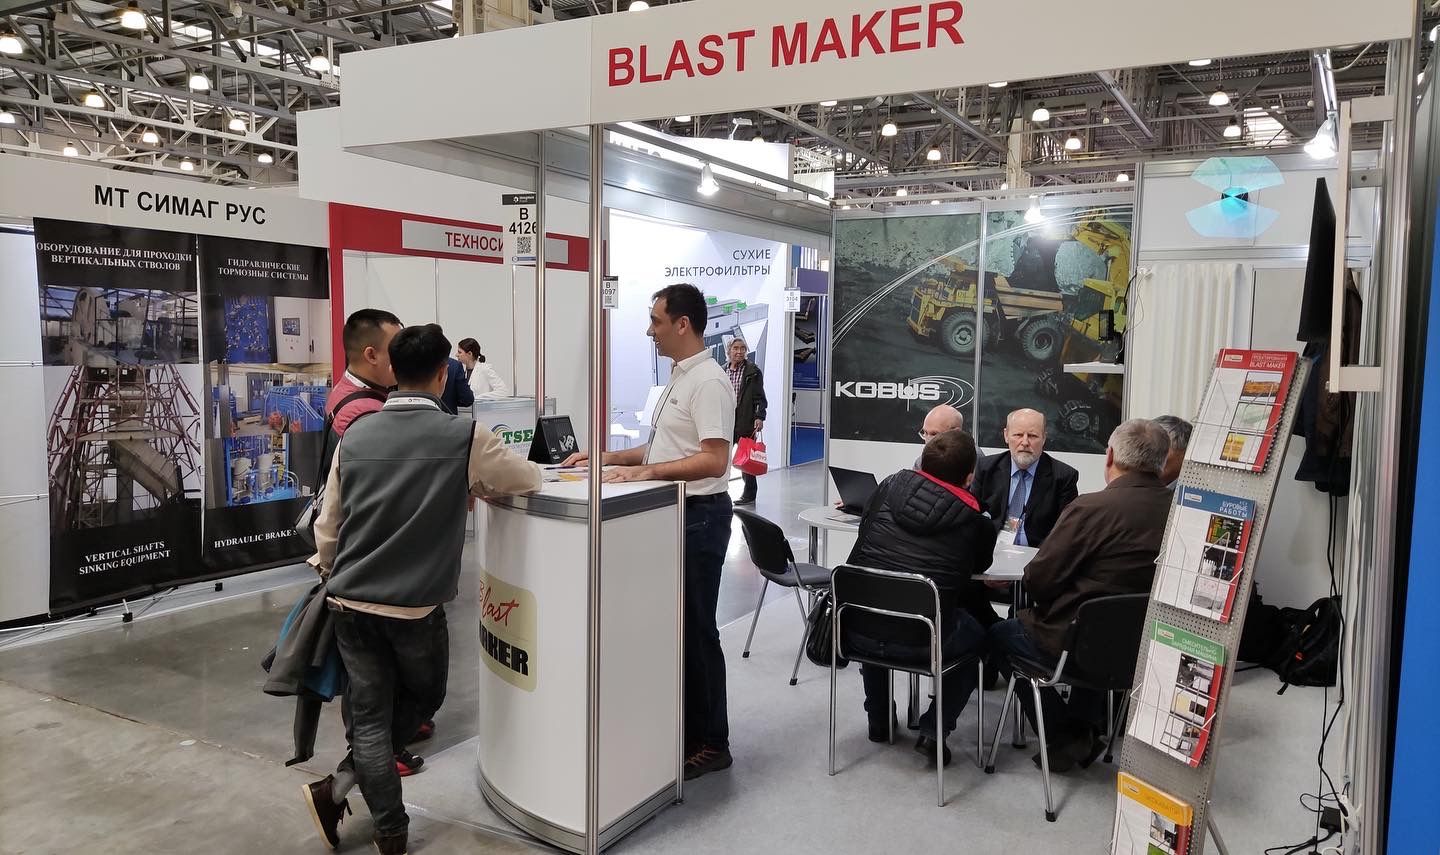 You are currently viewing MiningWorld Russia 2022. Участие компании «Blast Maker» международной выставке в качестве экспонента.